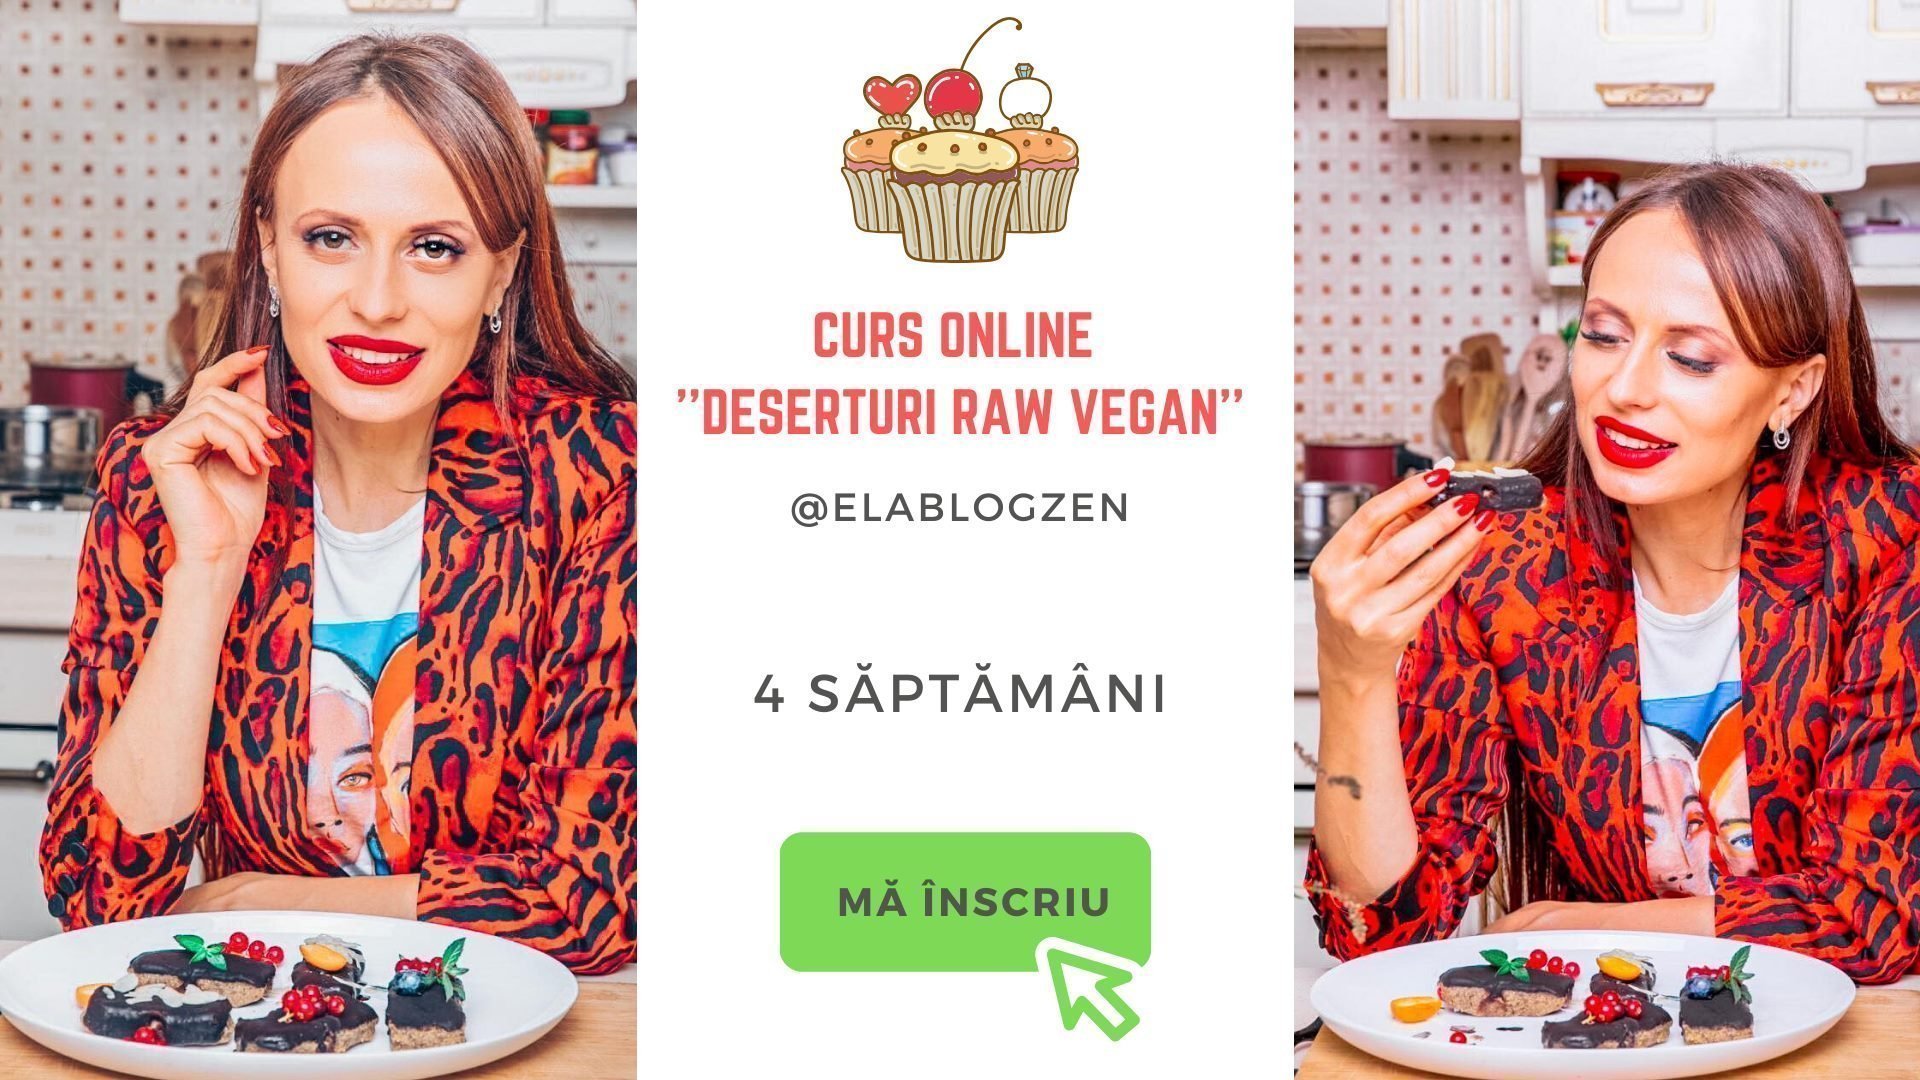  Curs Online Deserturi Raw Vegan cu Diana Chistol 